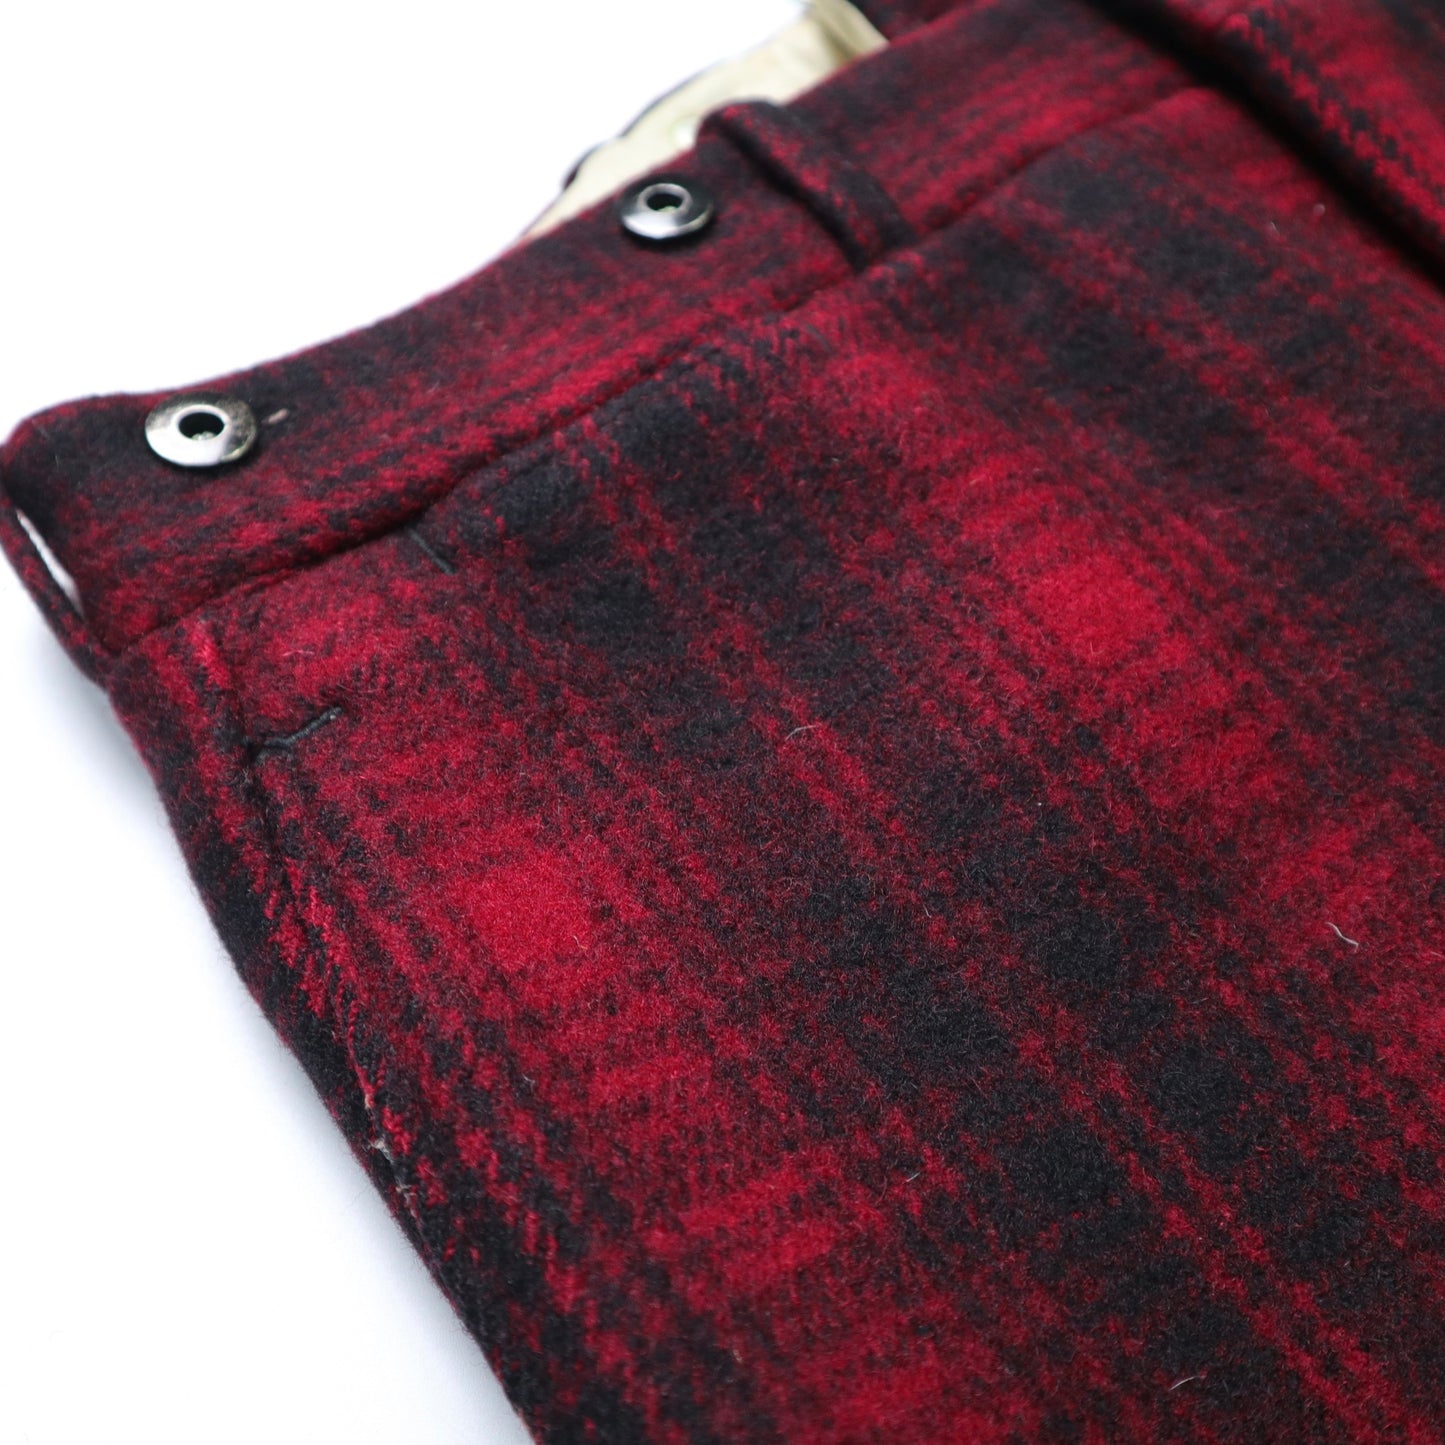 (34W)1950s Woolrich American wool red plaid hunting pants Talon zipper